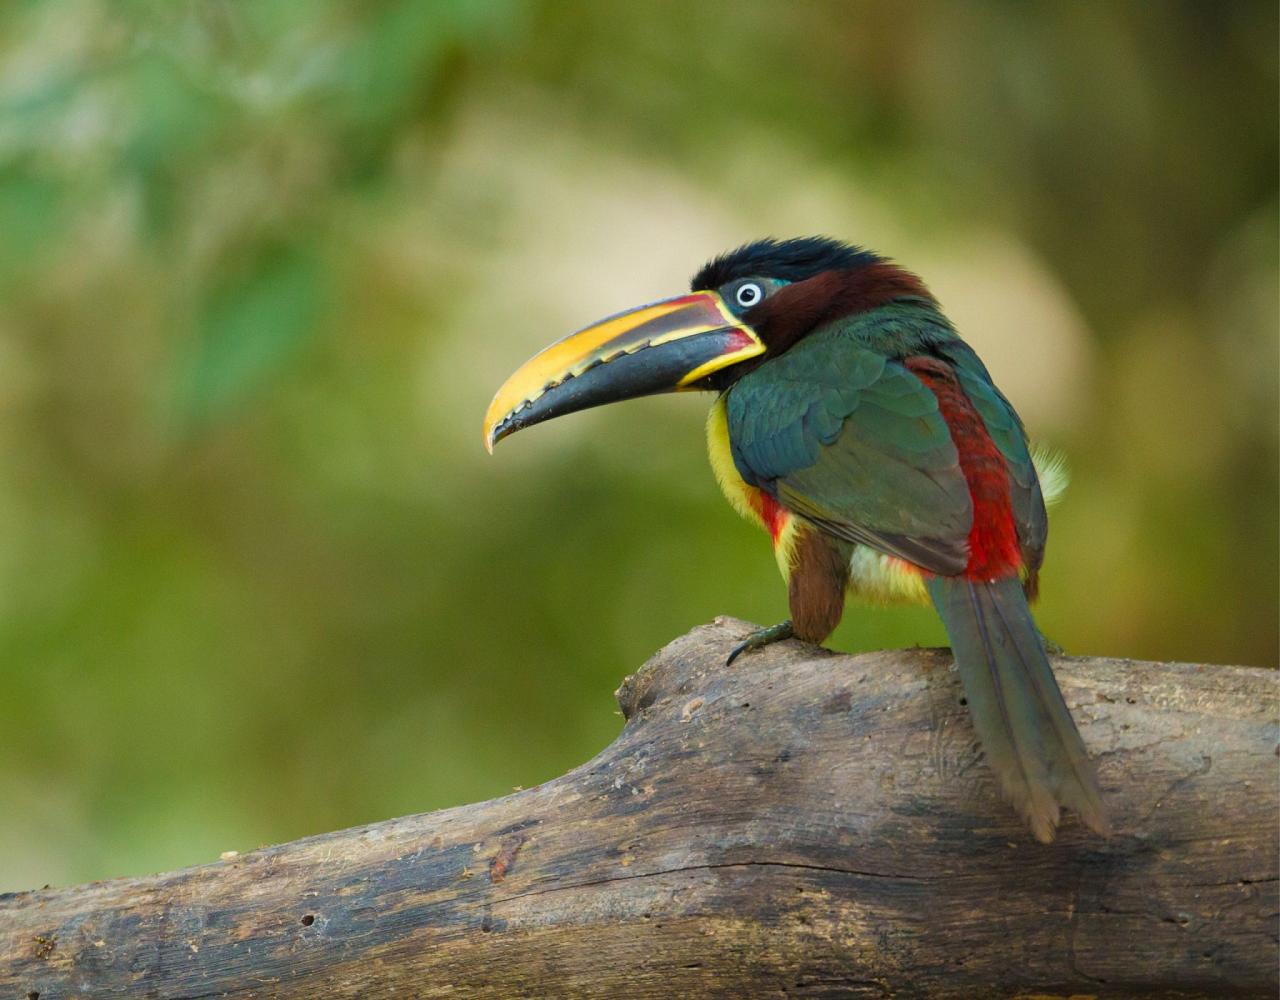 Birding the Amazon, Bird watching South America, Nature Tour, Amazon River, Naturalist Journeys, Wildlife Tour, Wildlife Photography, Ecotourism, Specialty Birds, Birding Hotspot, Endemic Birds